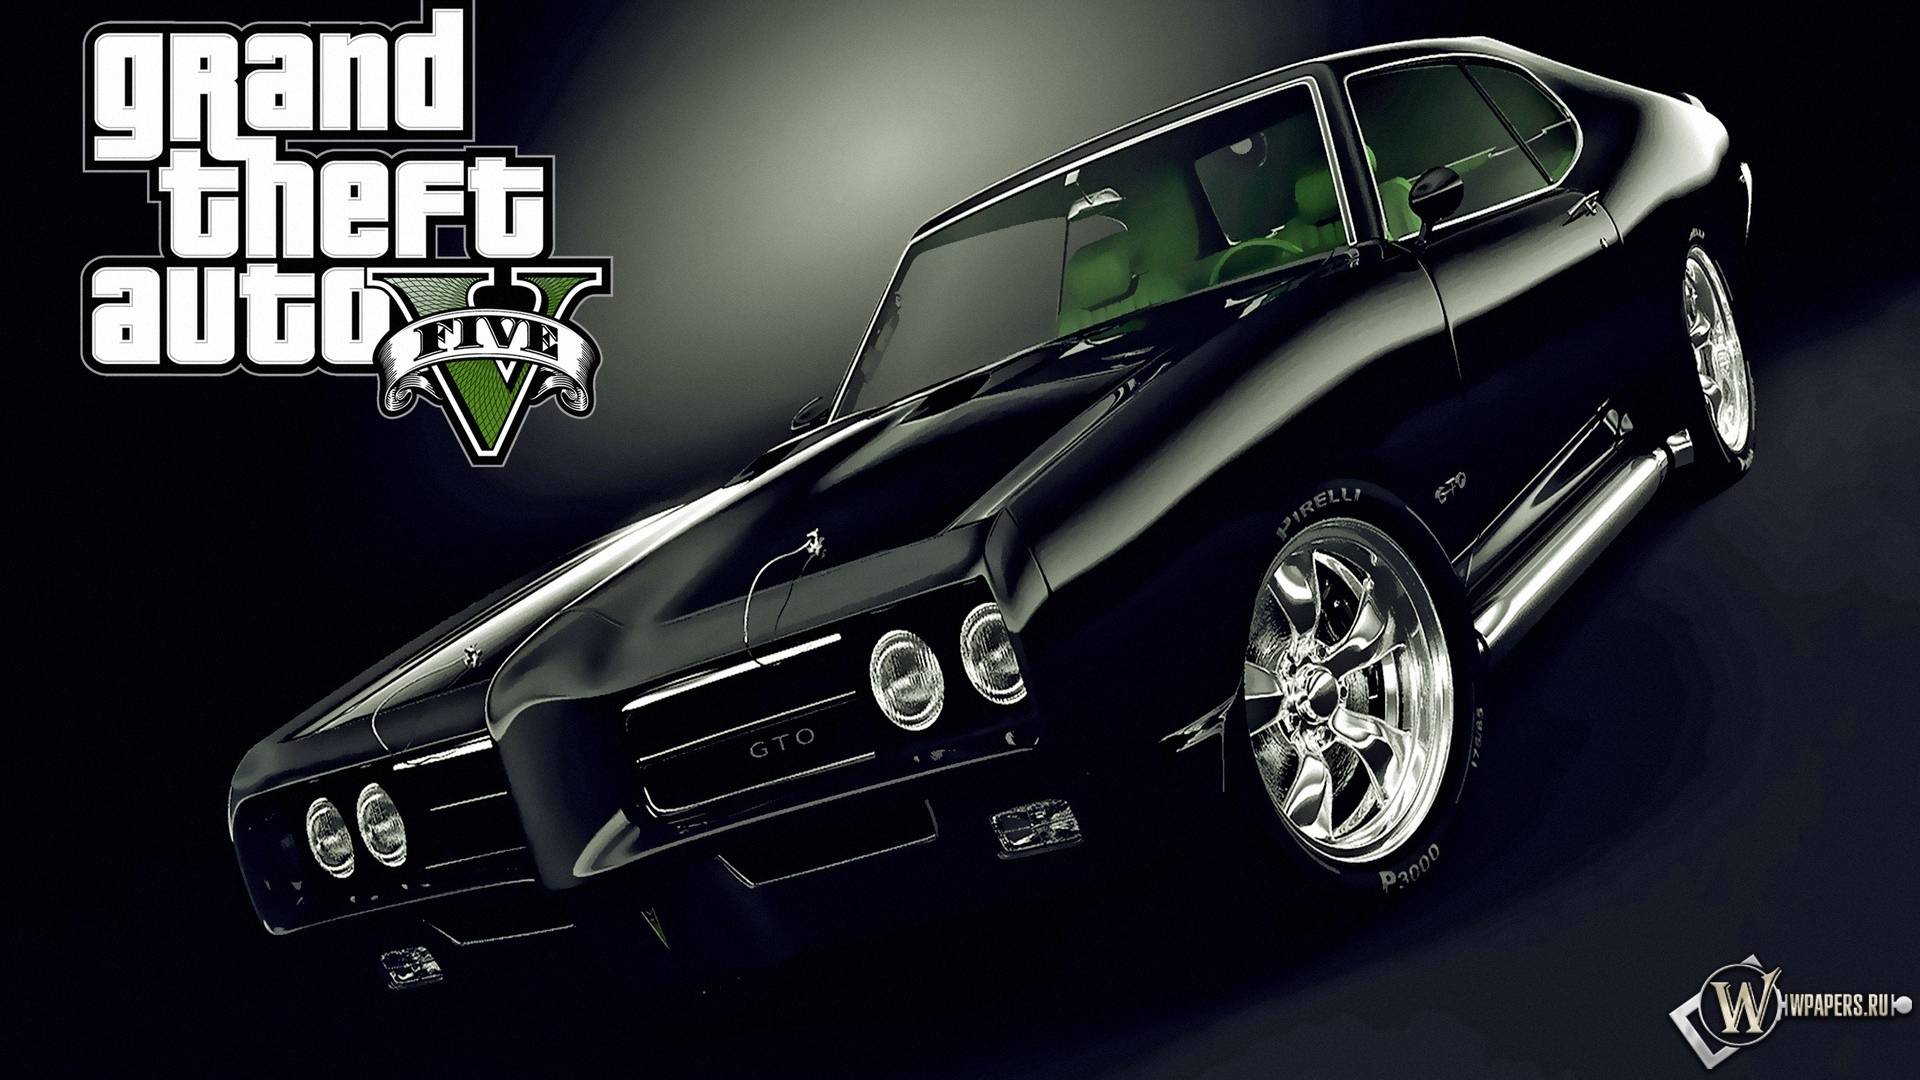 Grand Theft Auto Image Gta Car Jpg